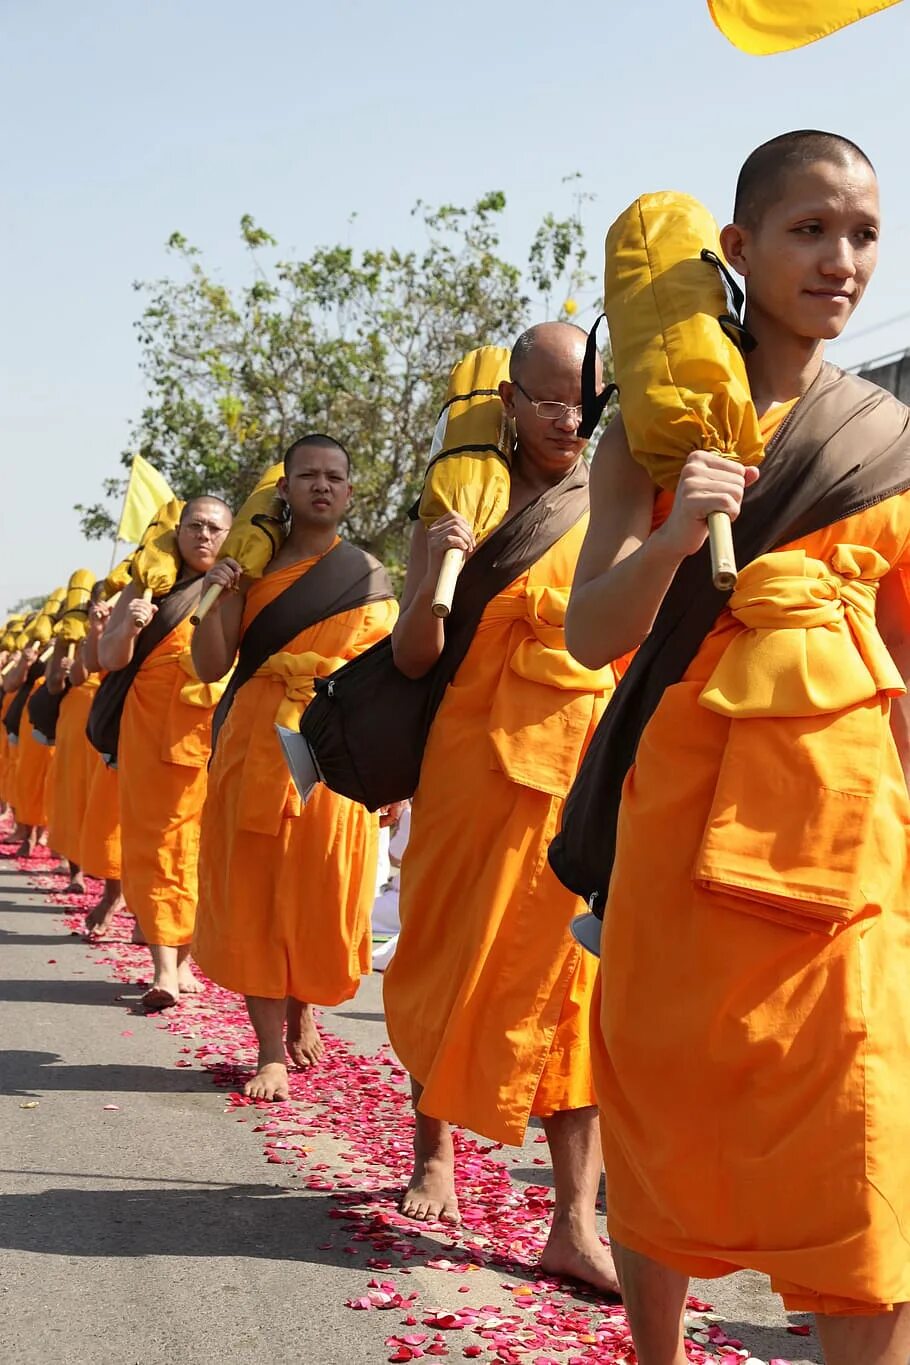 Буддисты. Монах буддист. 109 Летний буддийский манах. Буддизм монахи. Община буддийских монахов.